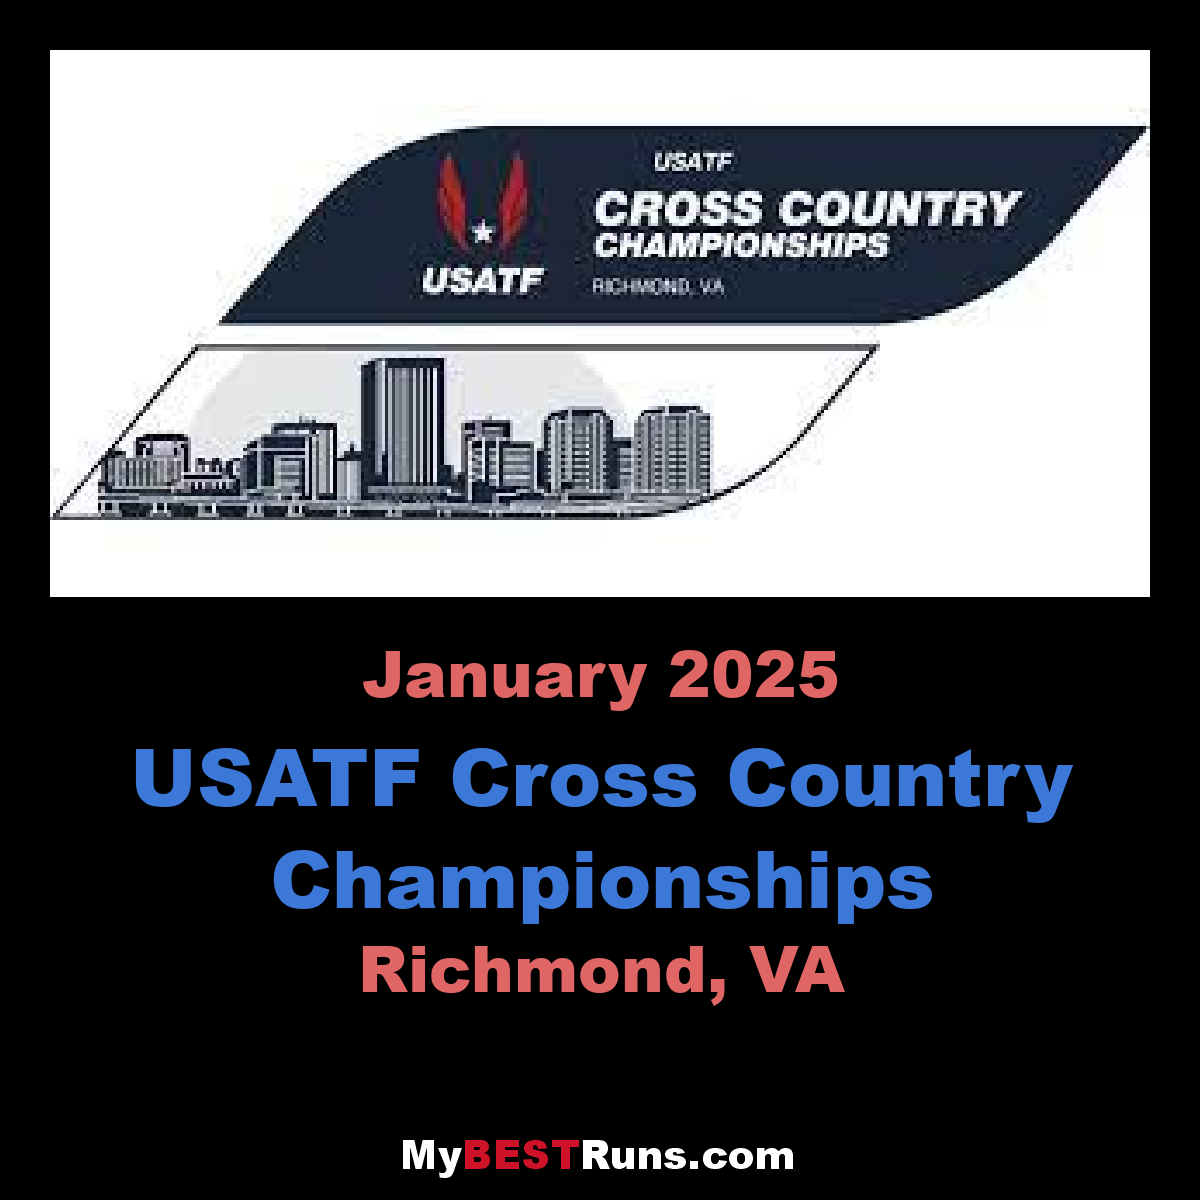 USATF Cross Country Championships